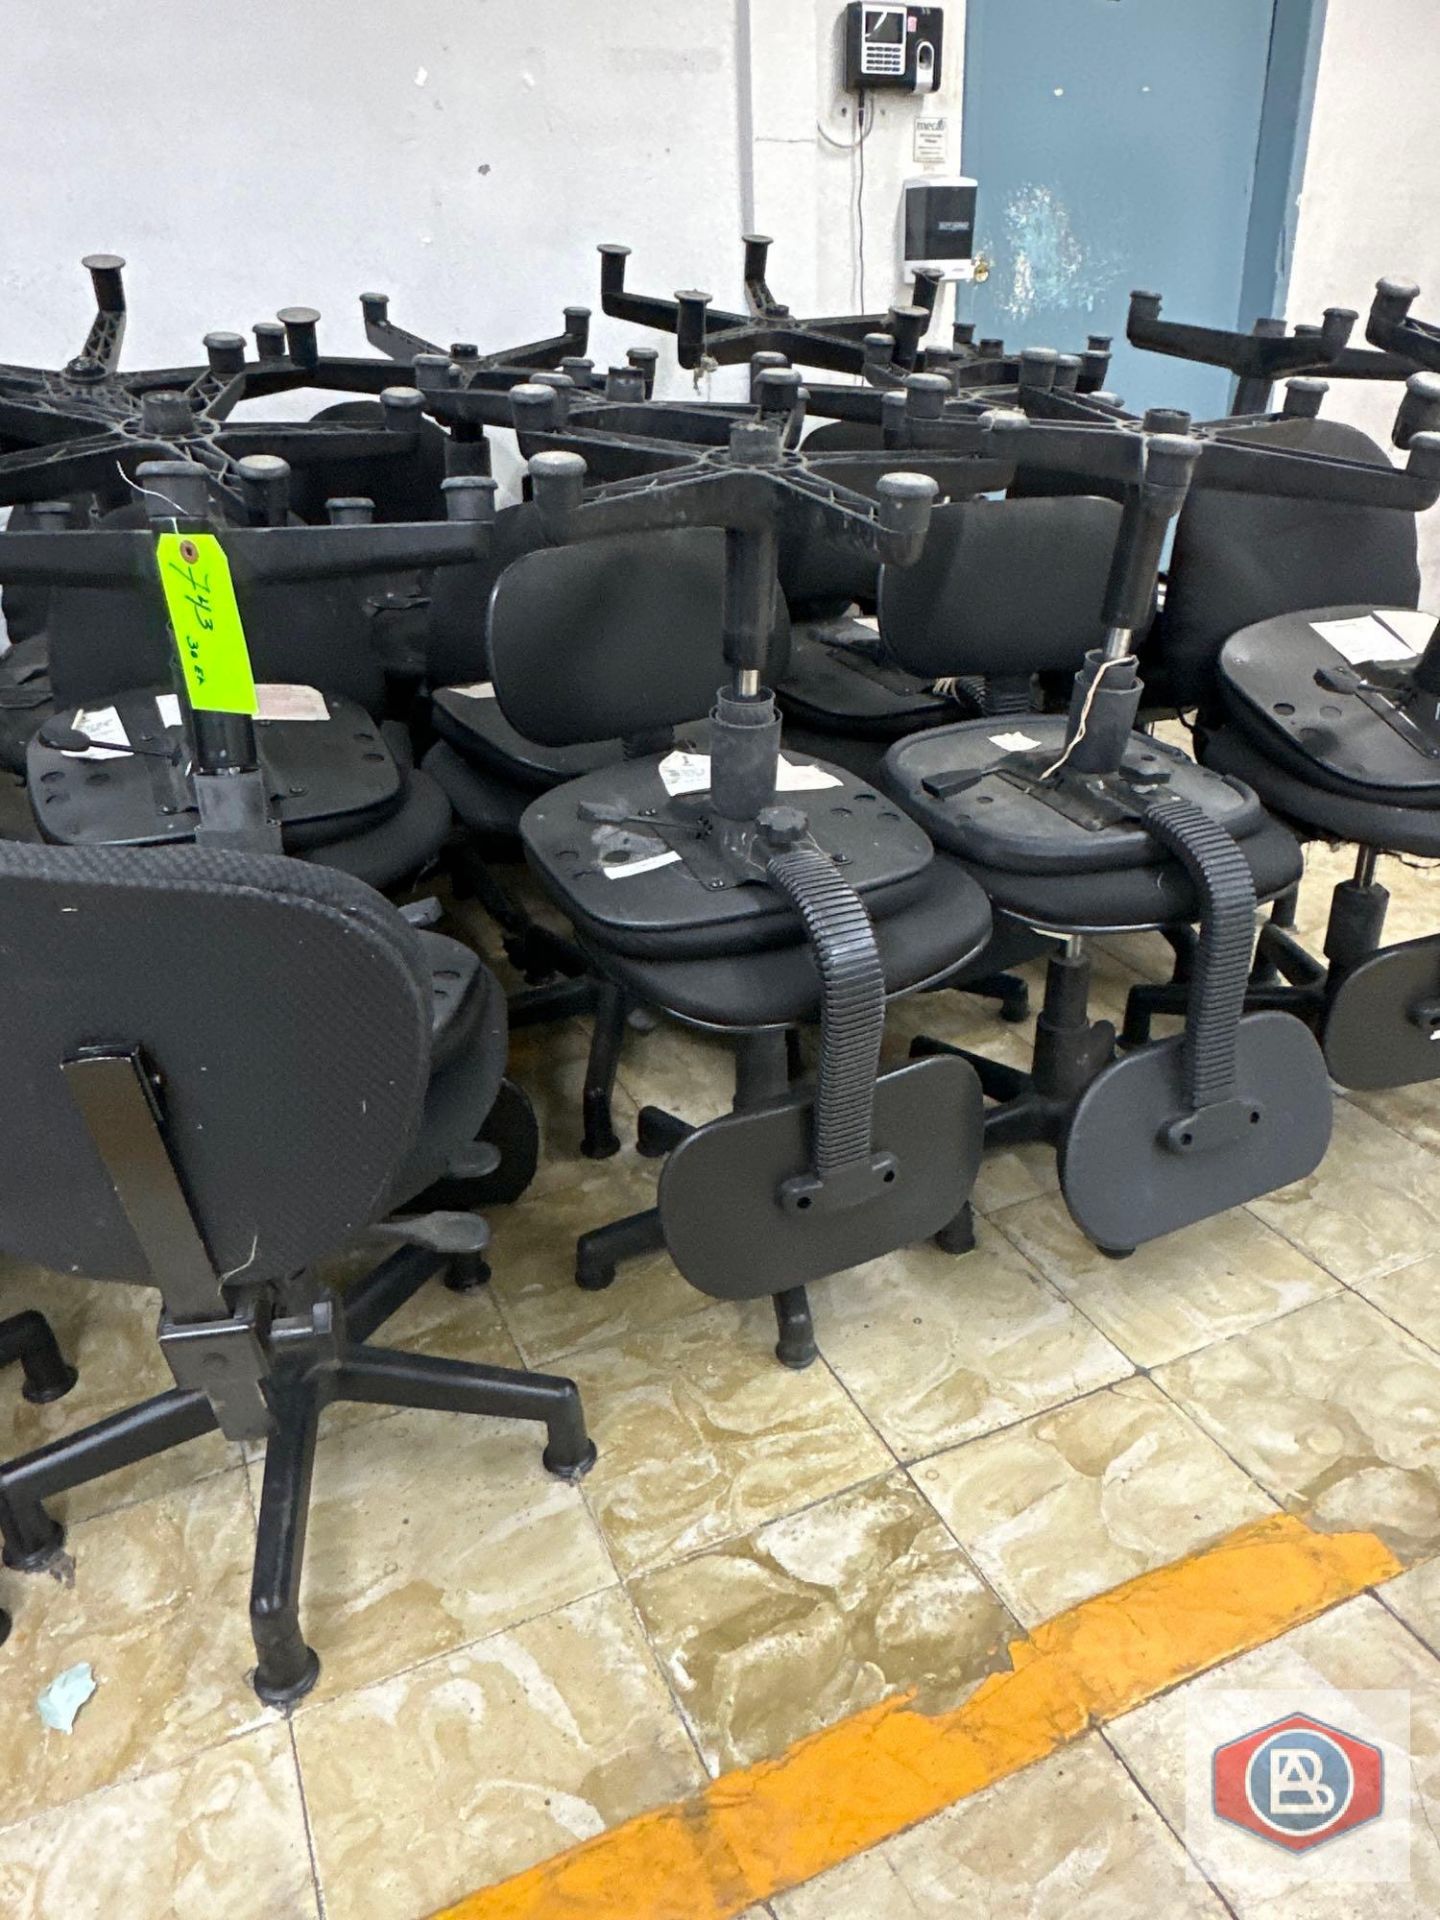 Black Task Chairs